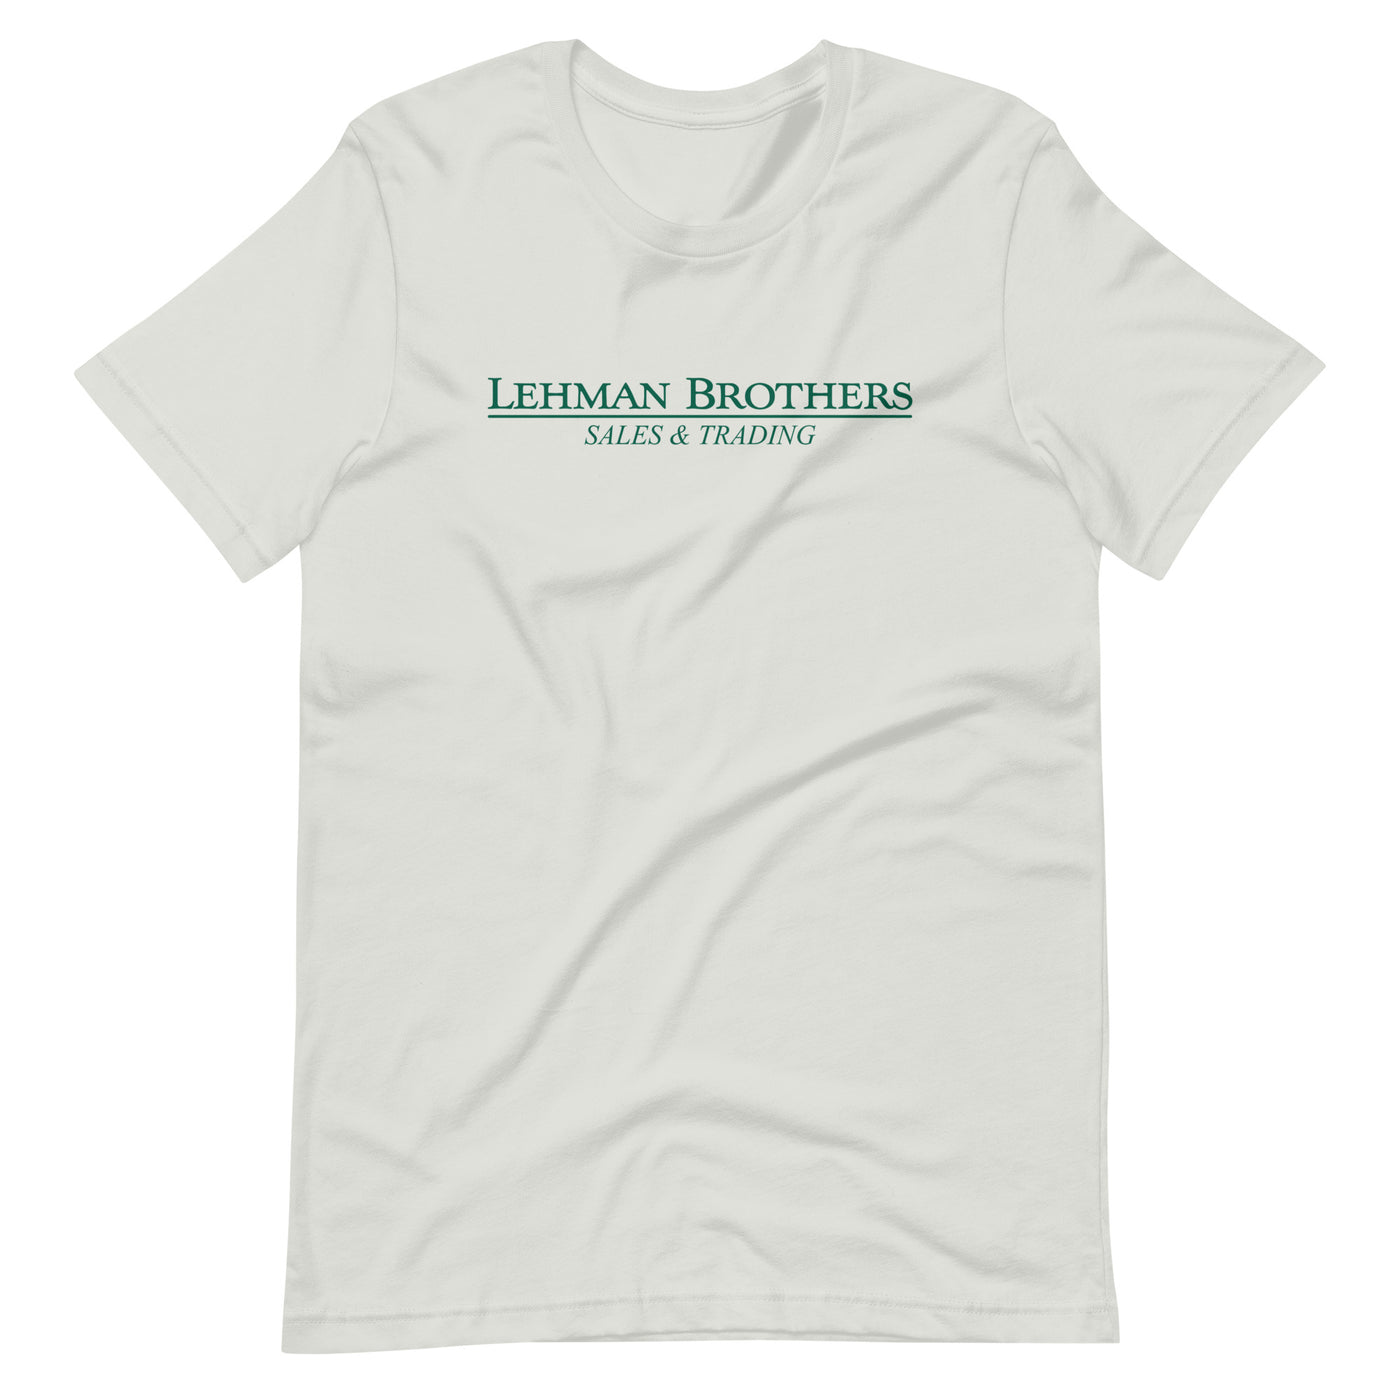 LB Sales & Trading T Shirt - Arbitrage Andy